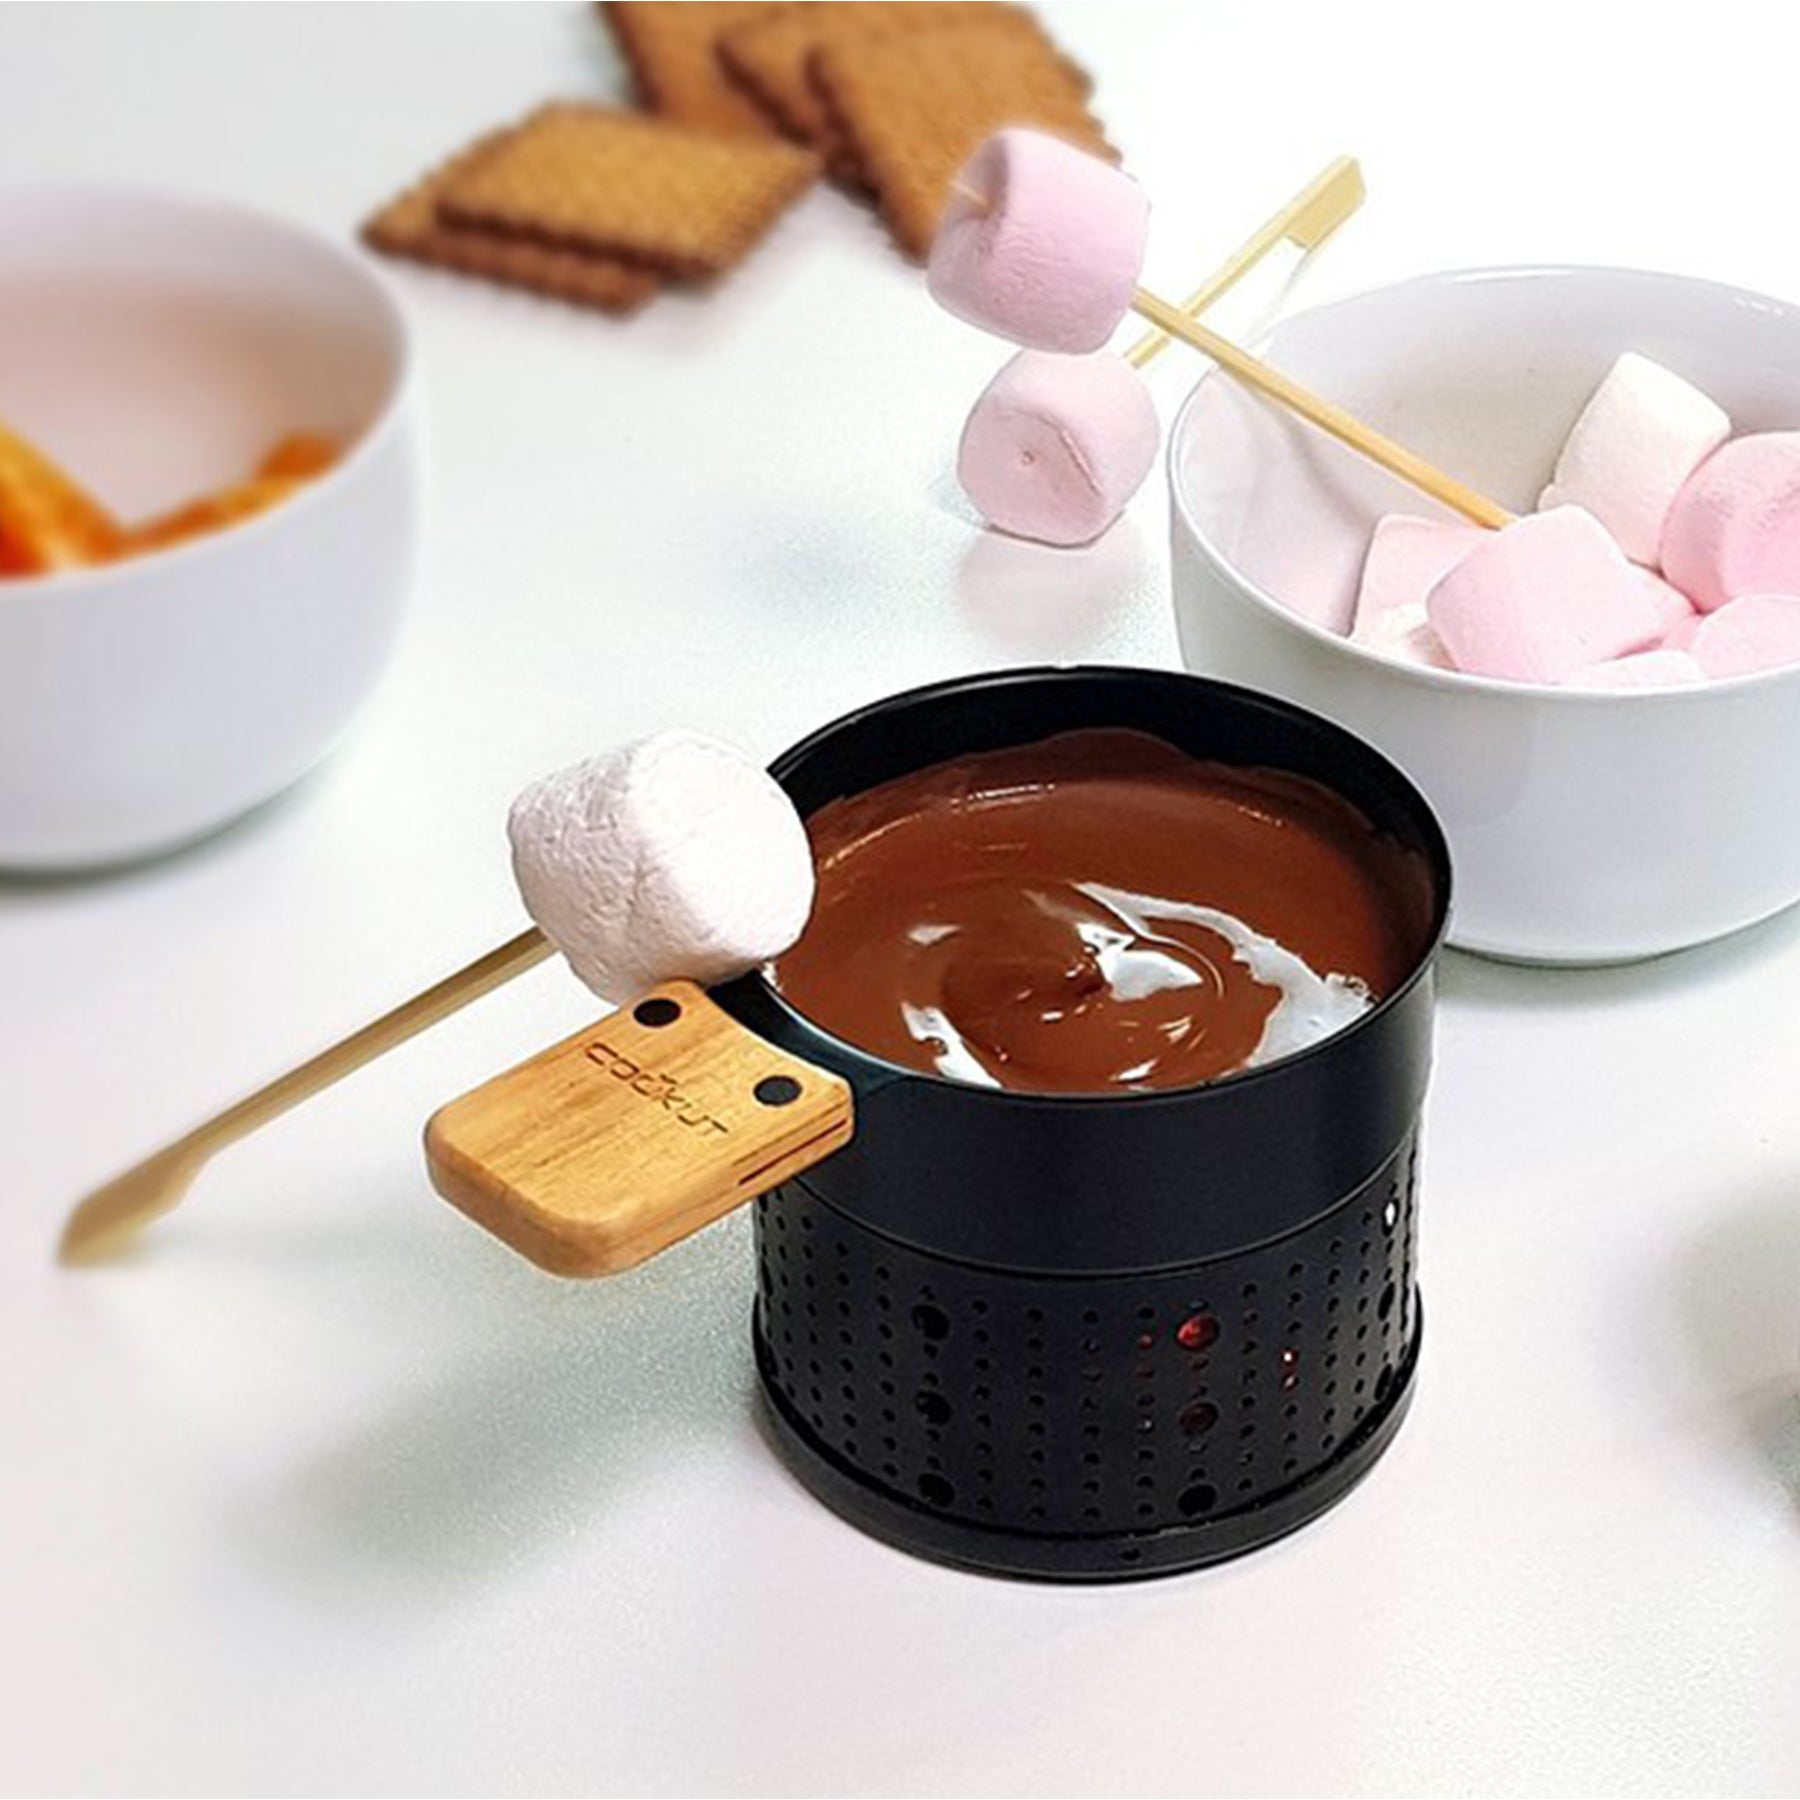 Dipping marshmallows in the mini chocolate fondue set